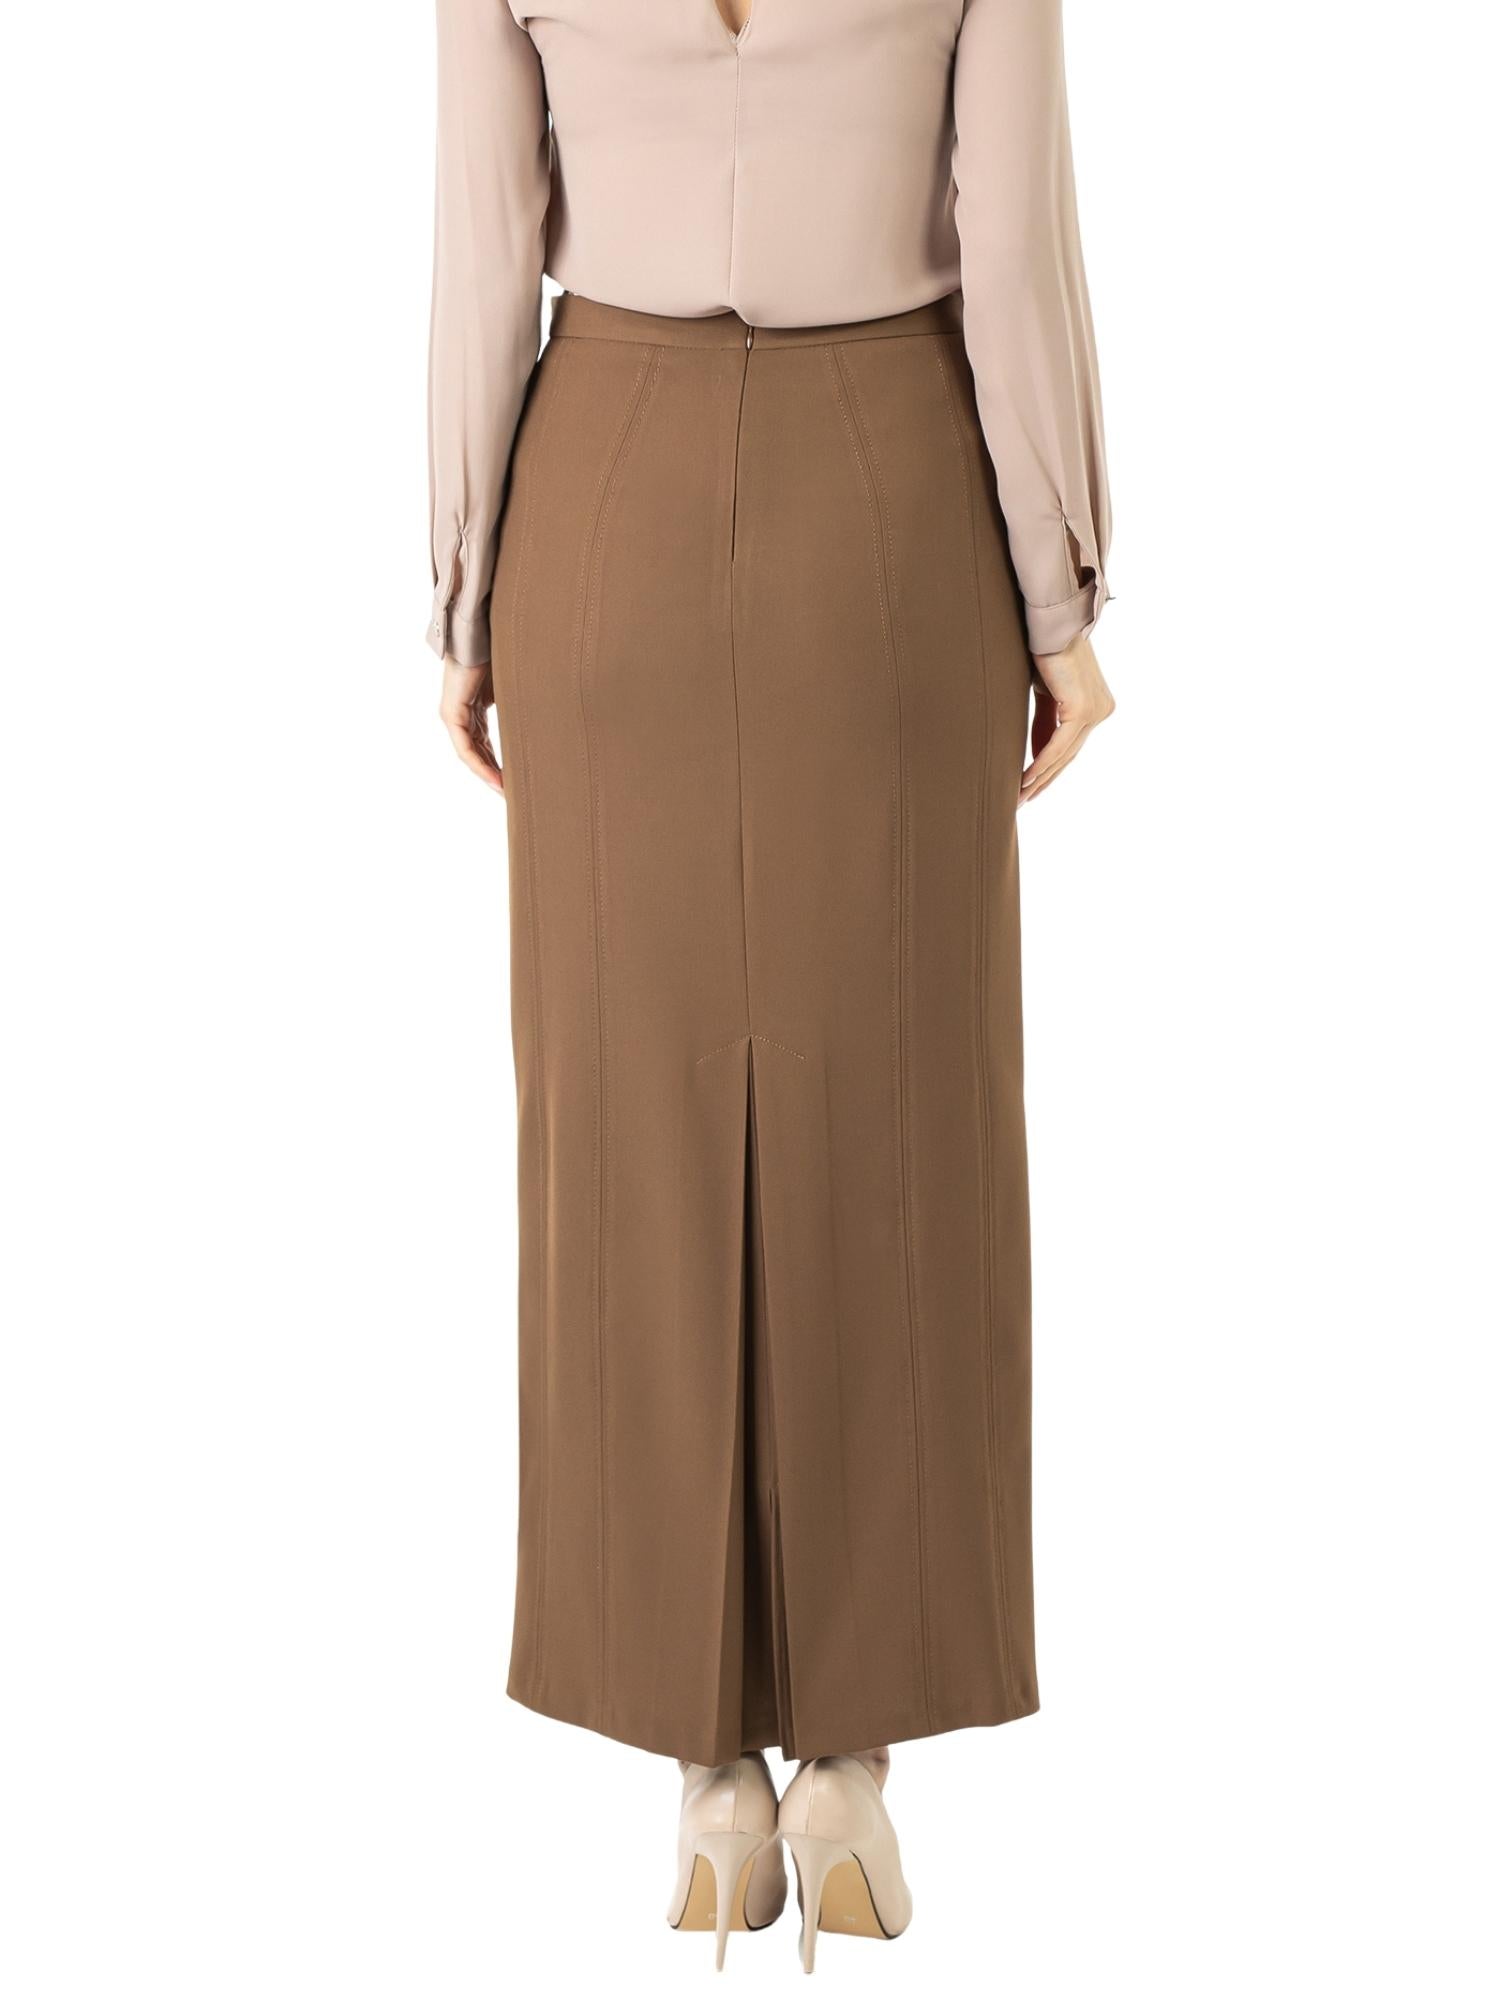 Cupric Ankle Length Plus Size Back Split Maxi Skirt G-Line